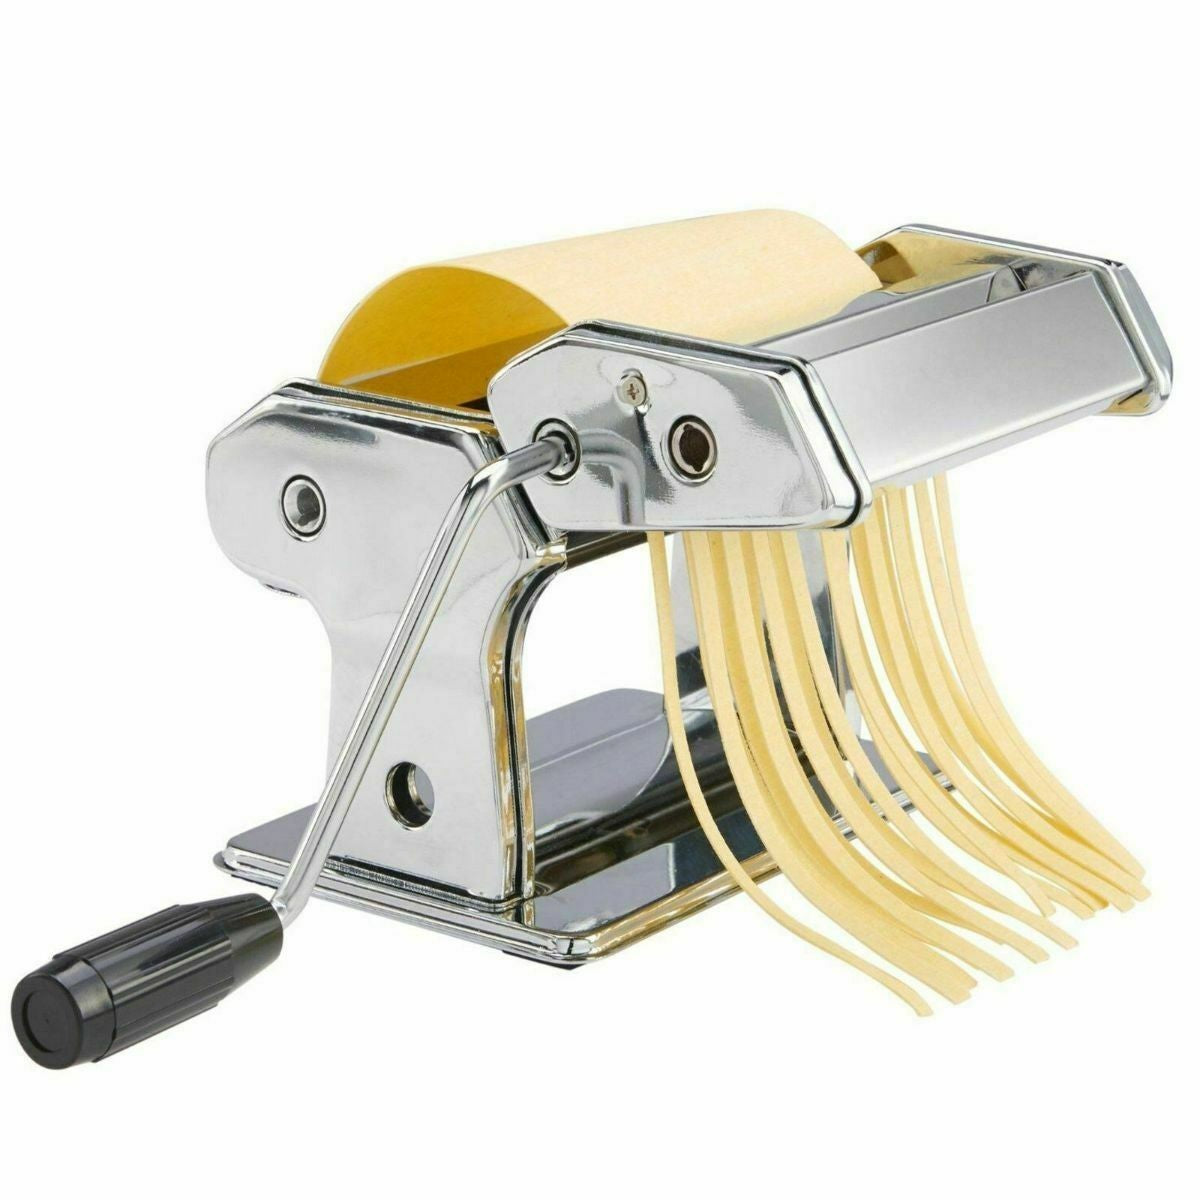 Masina Pentru Taitei Si Spaghete, Diverse Dimensiuni De Taiere, Otel inoxidabil